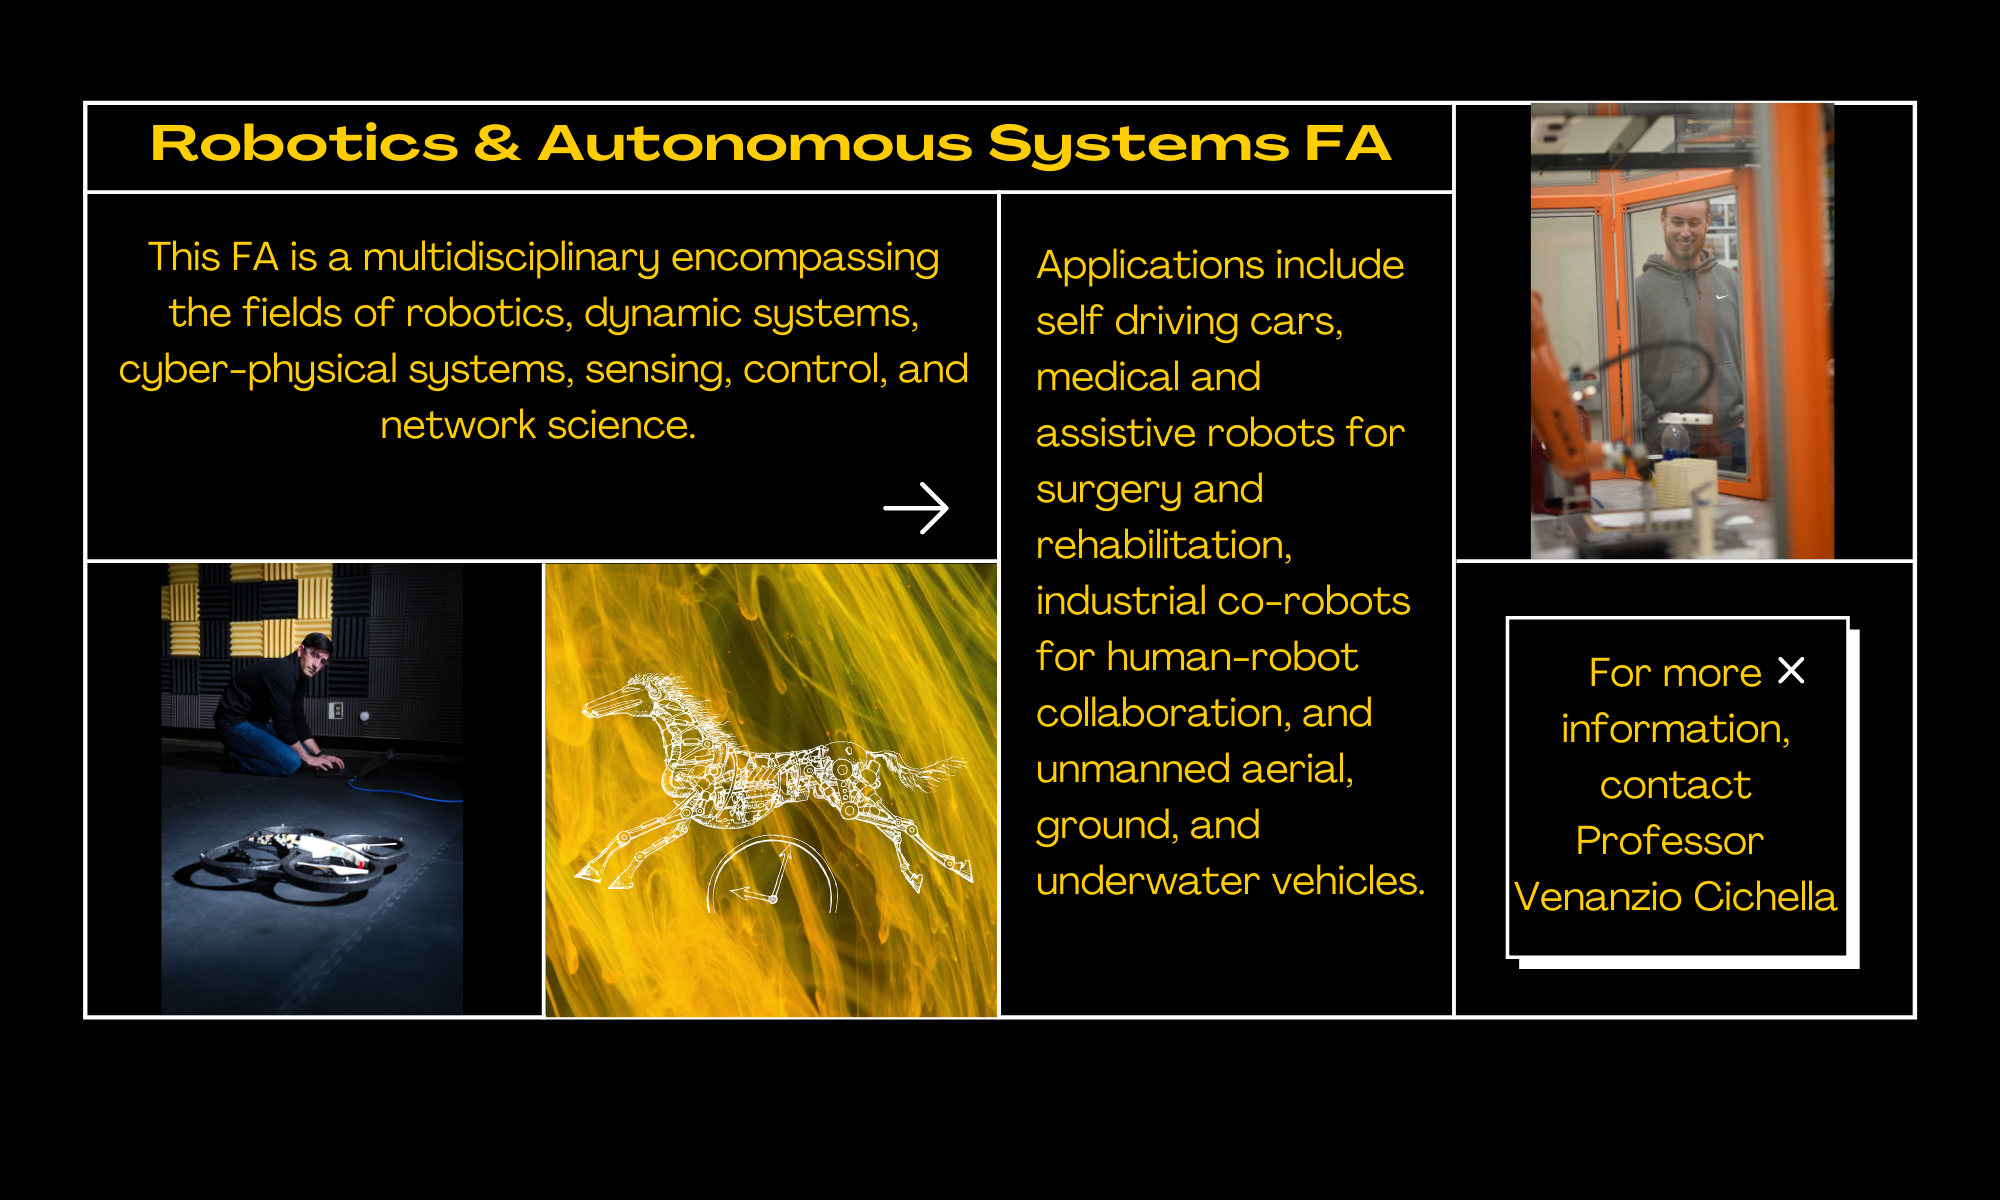 Robotics and Autonomous Systems FA